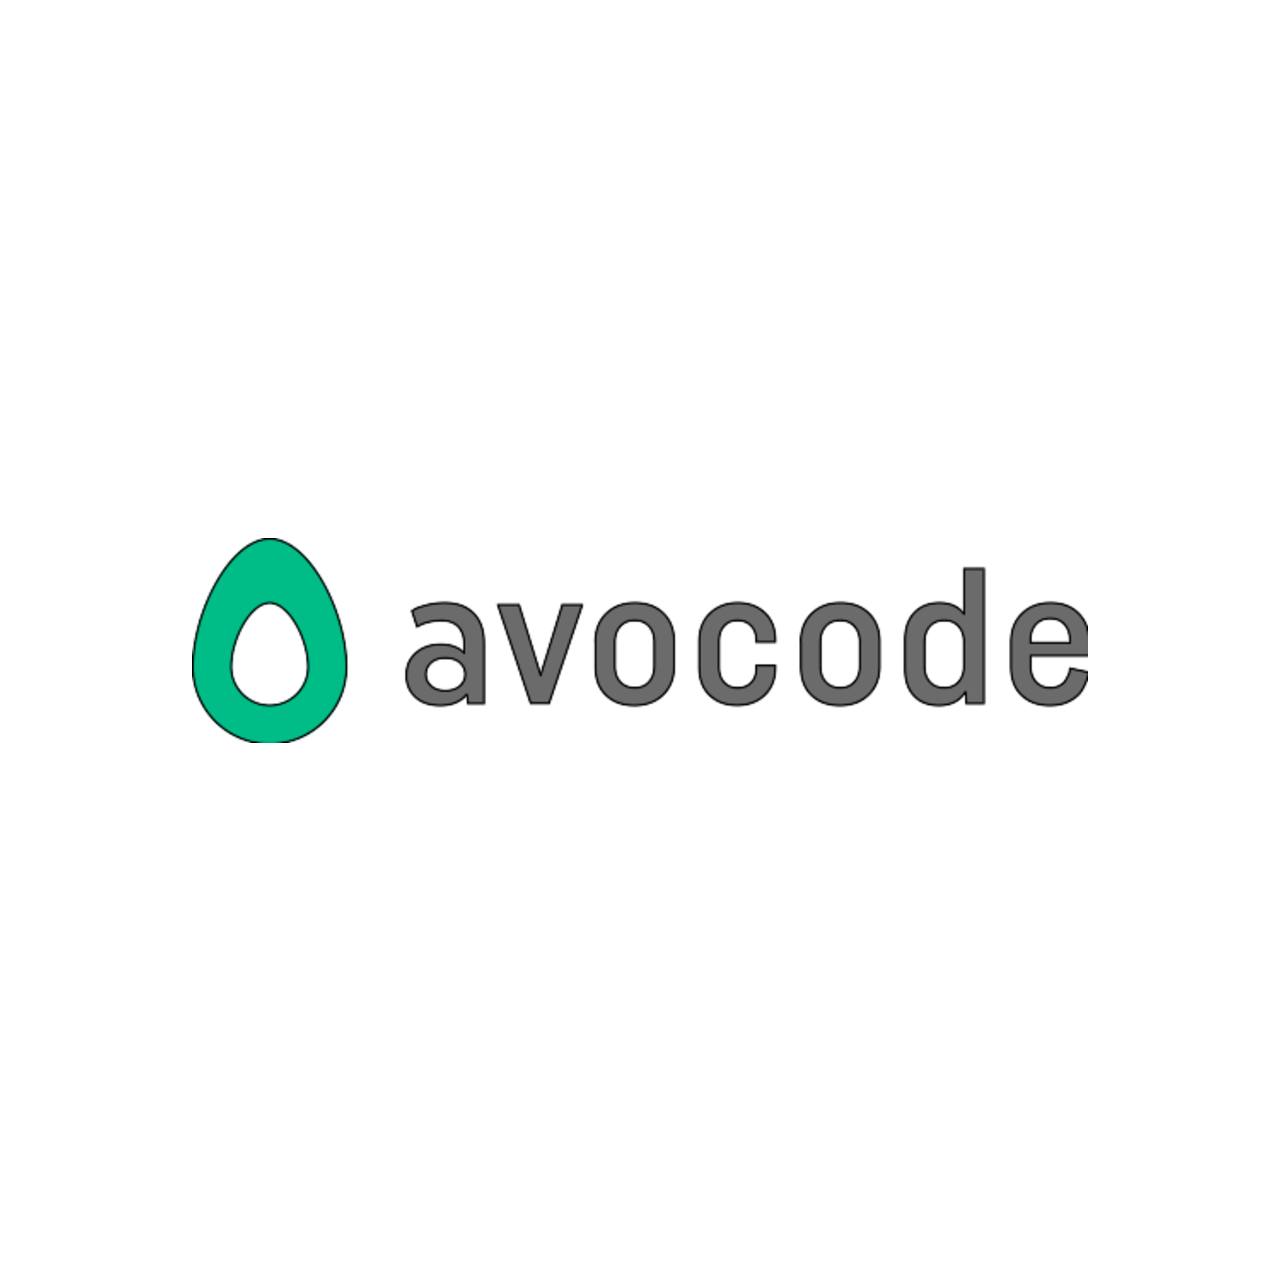 avocode arrange files